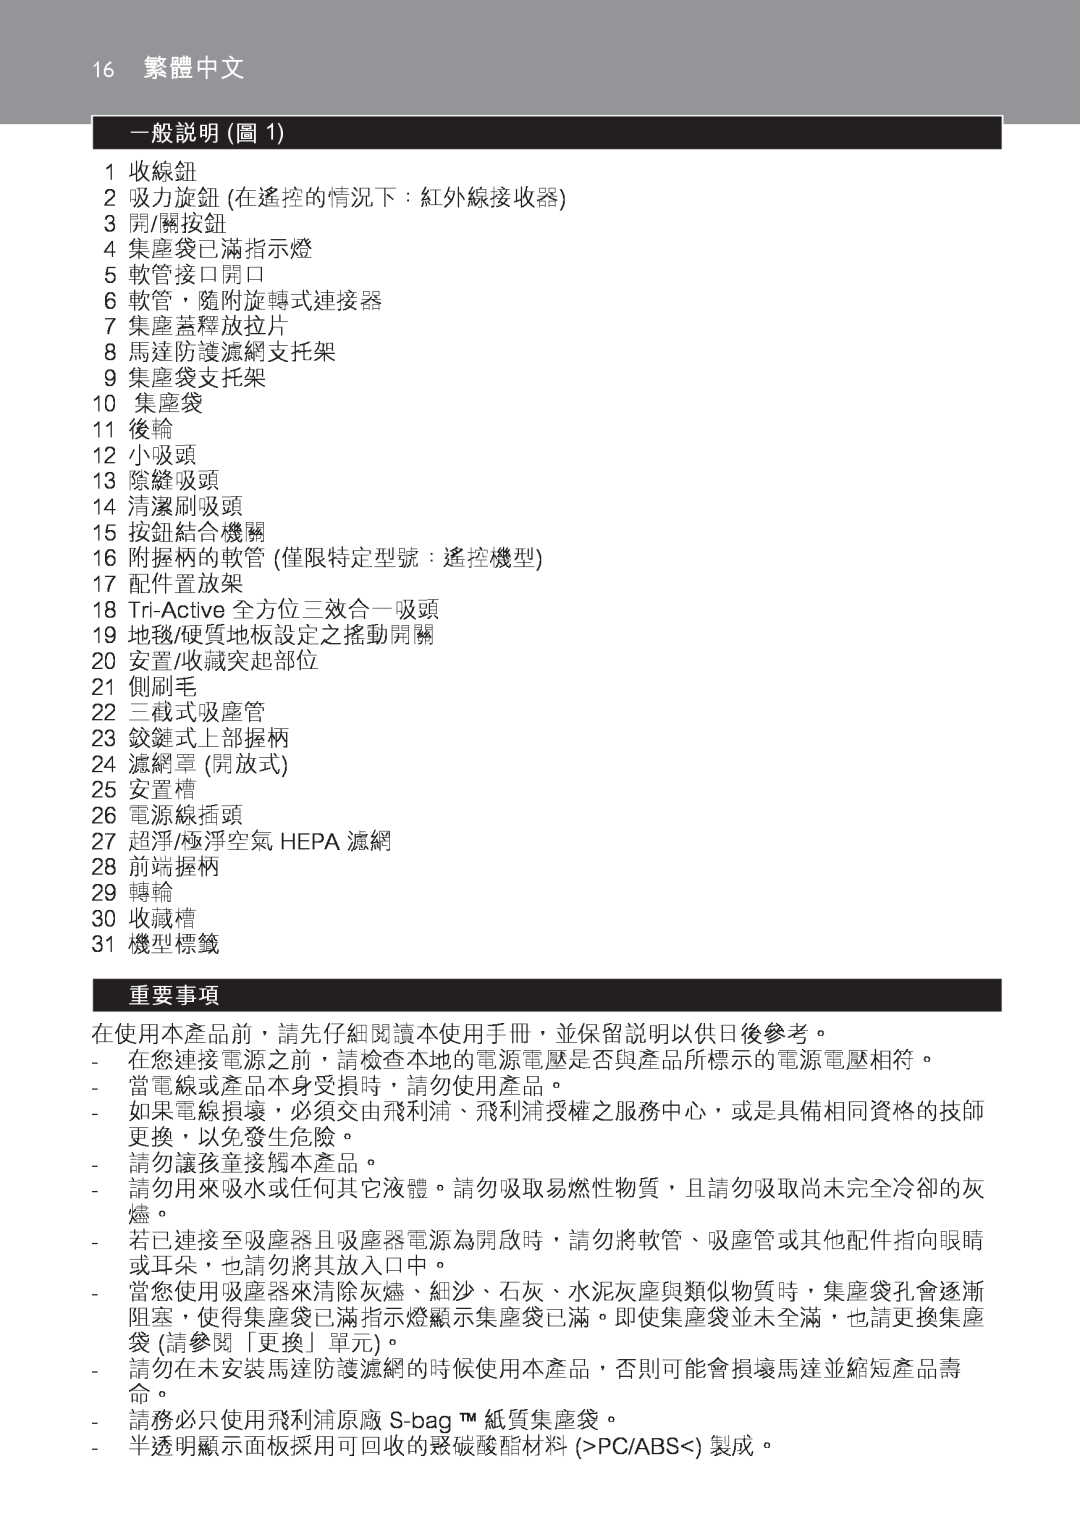 Philips FC9166-9160 manual 一般說明 圖, 重要事項, 16繁體中文 